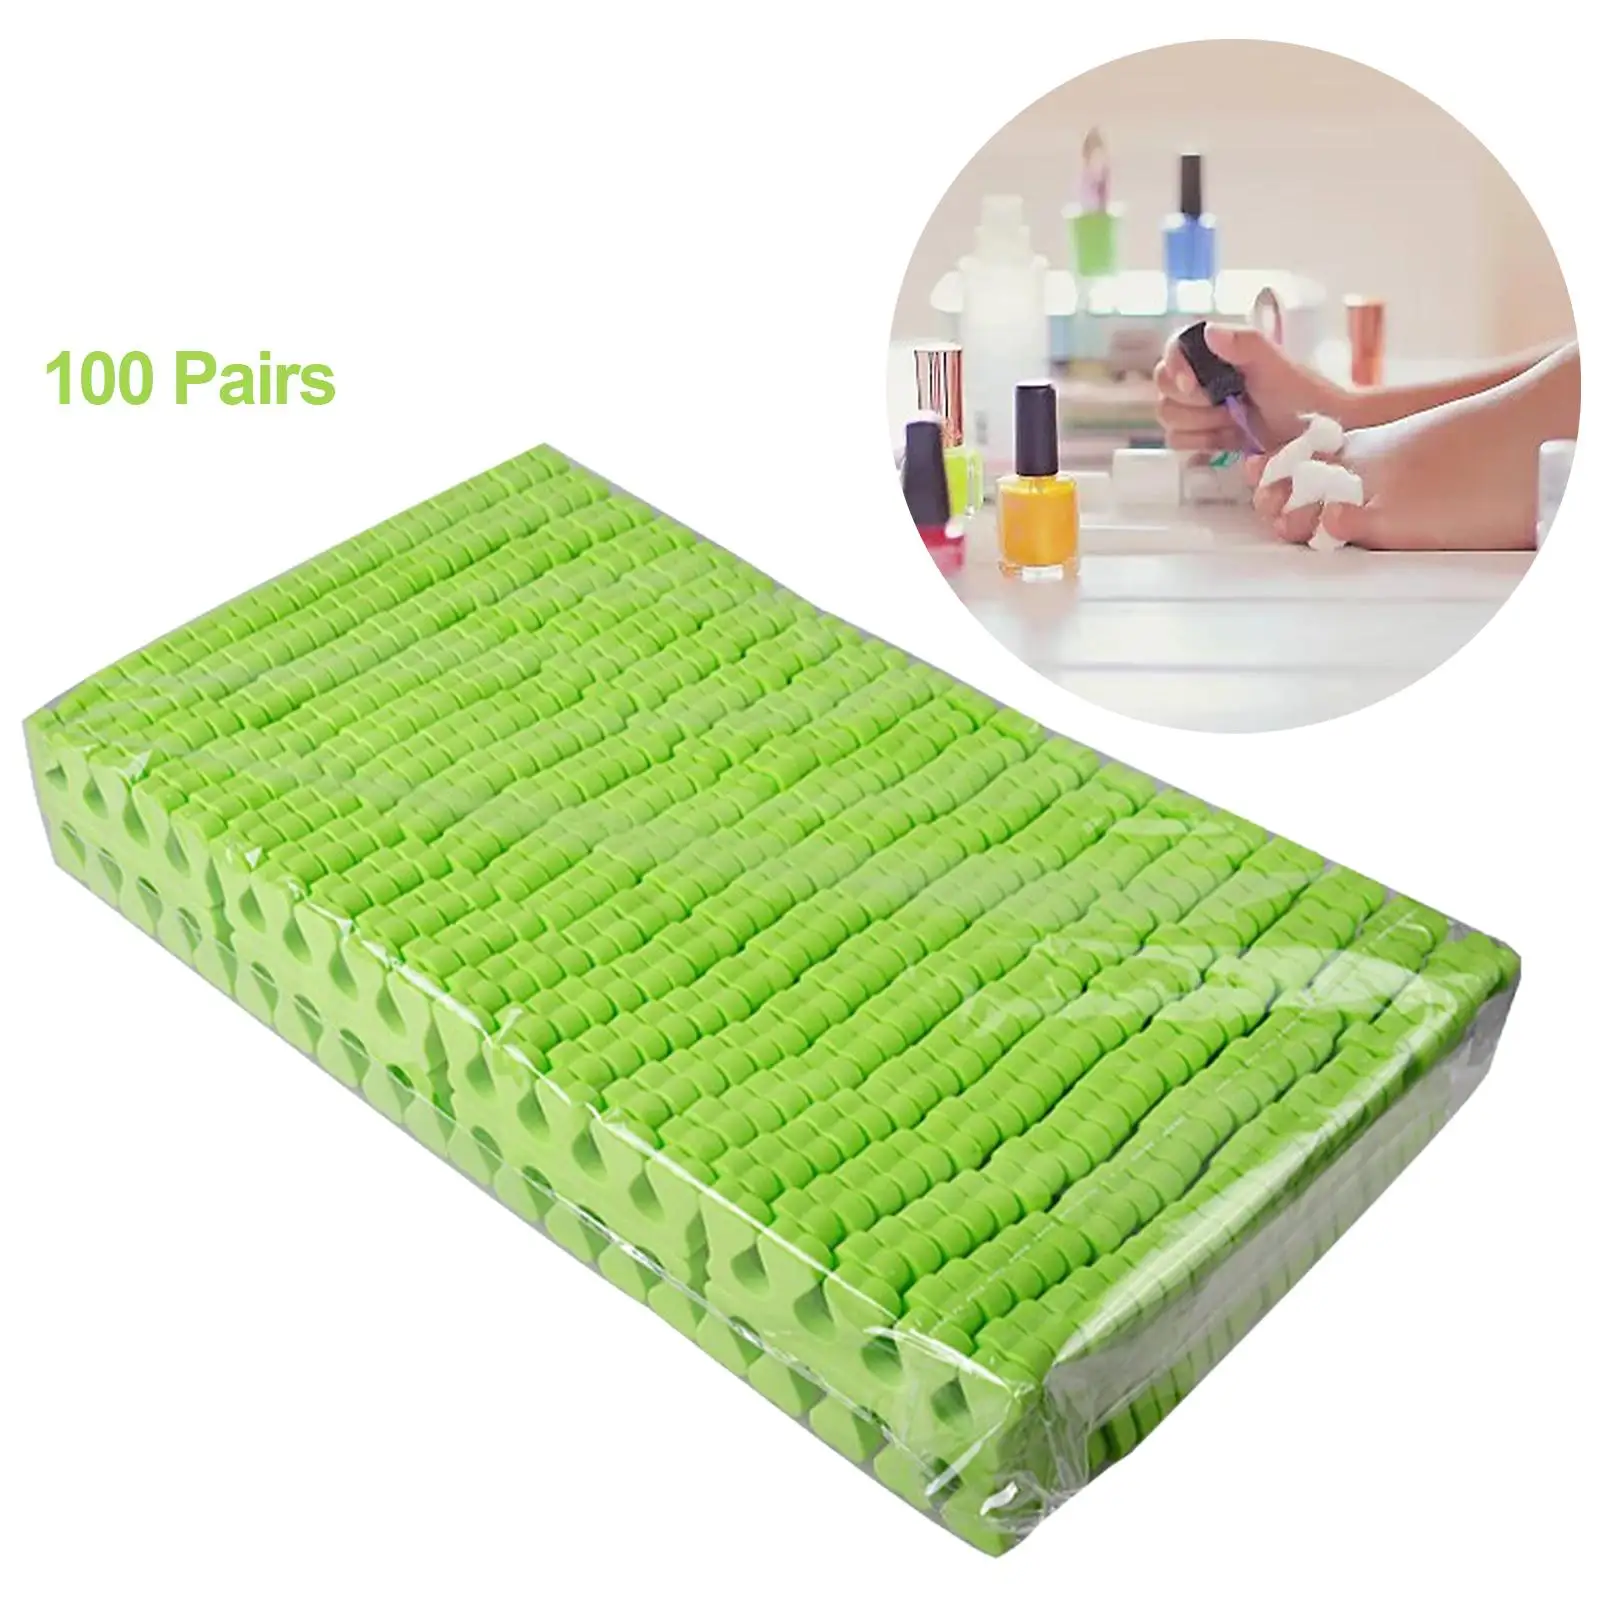  Toe Separator Soft Sponge Practical for Manicure Home Use 200Pcs